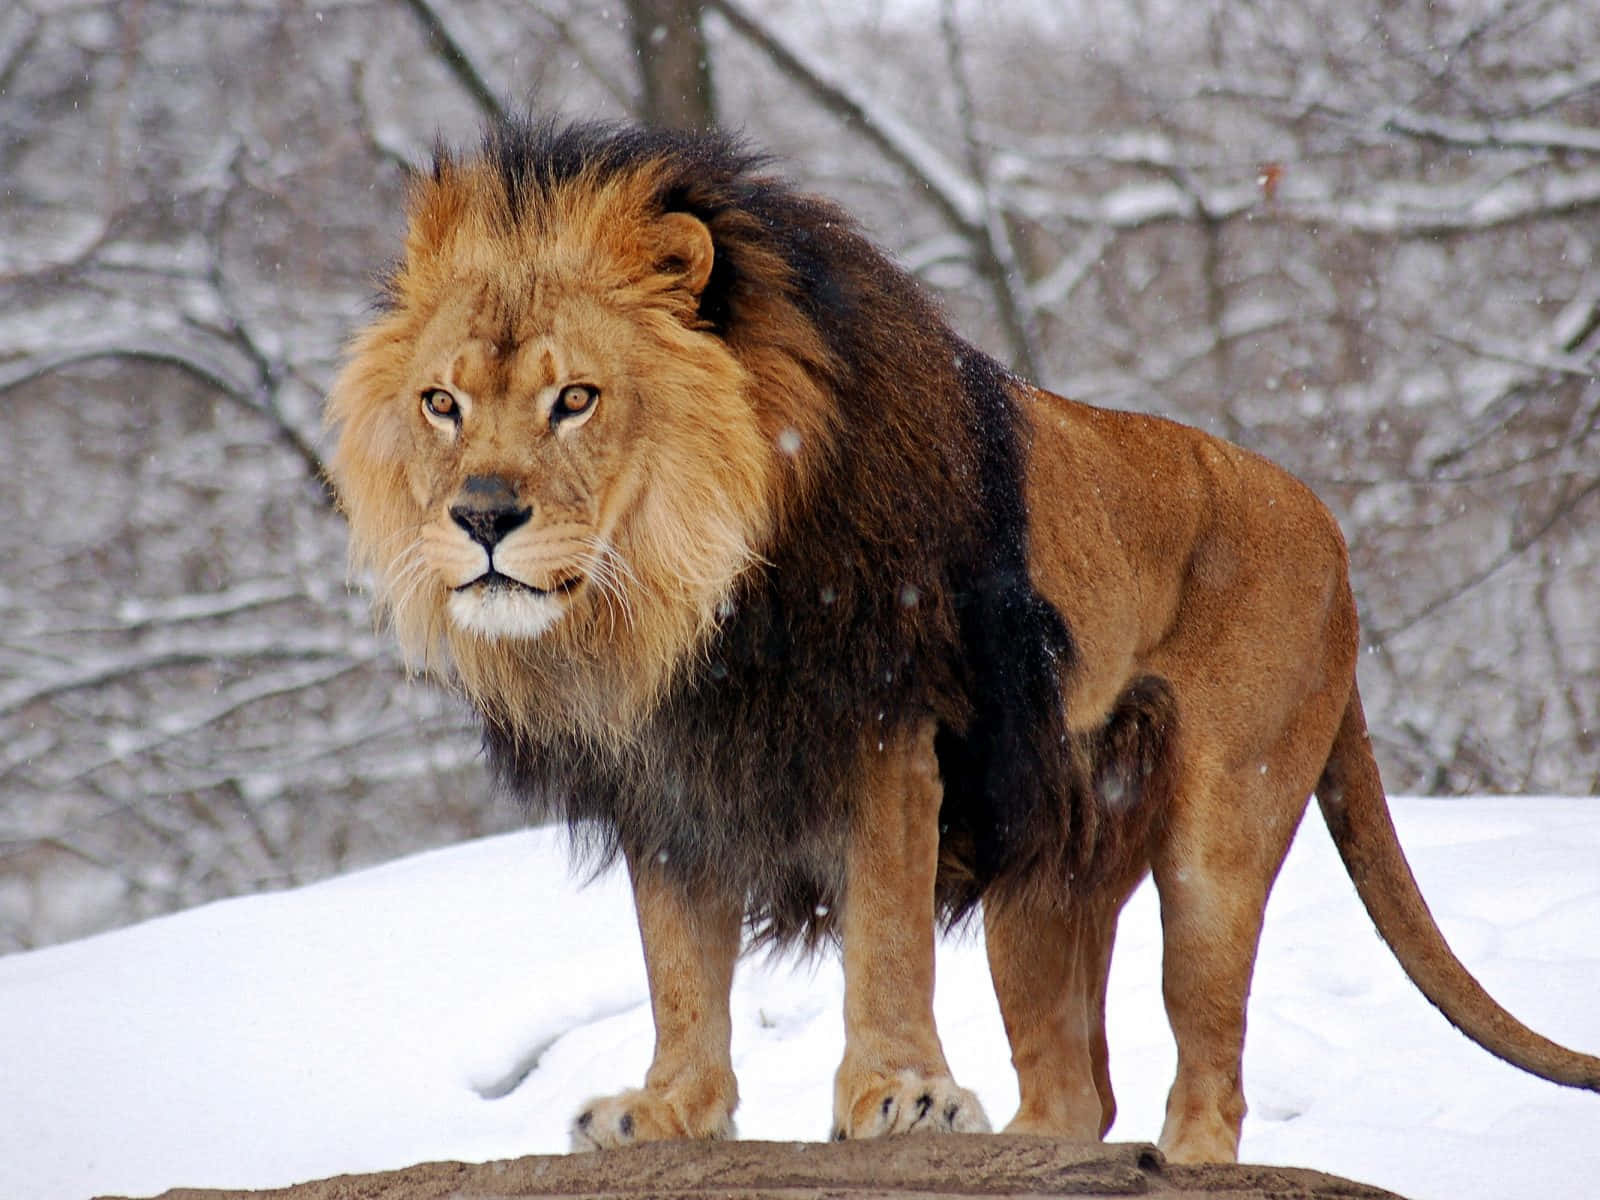 Staring a brave lion